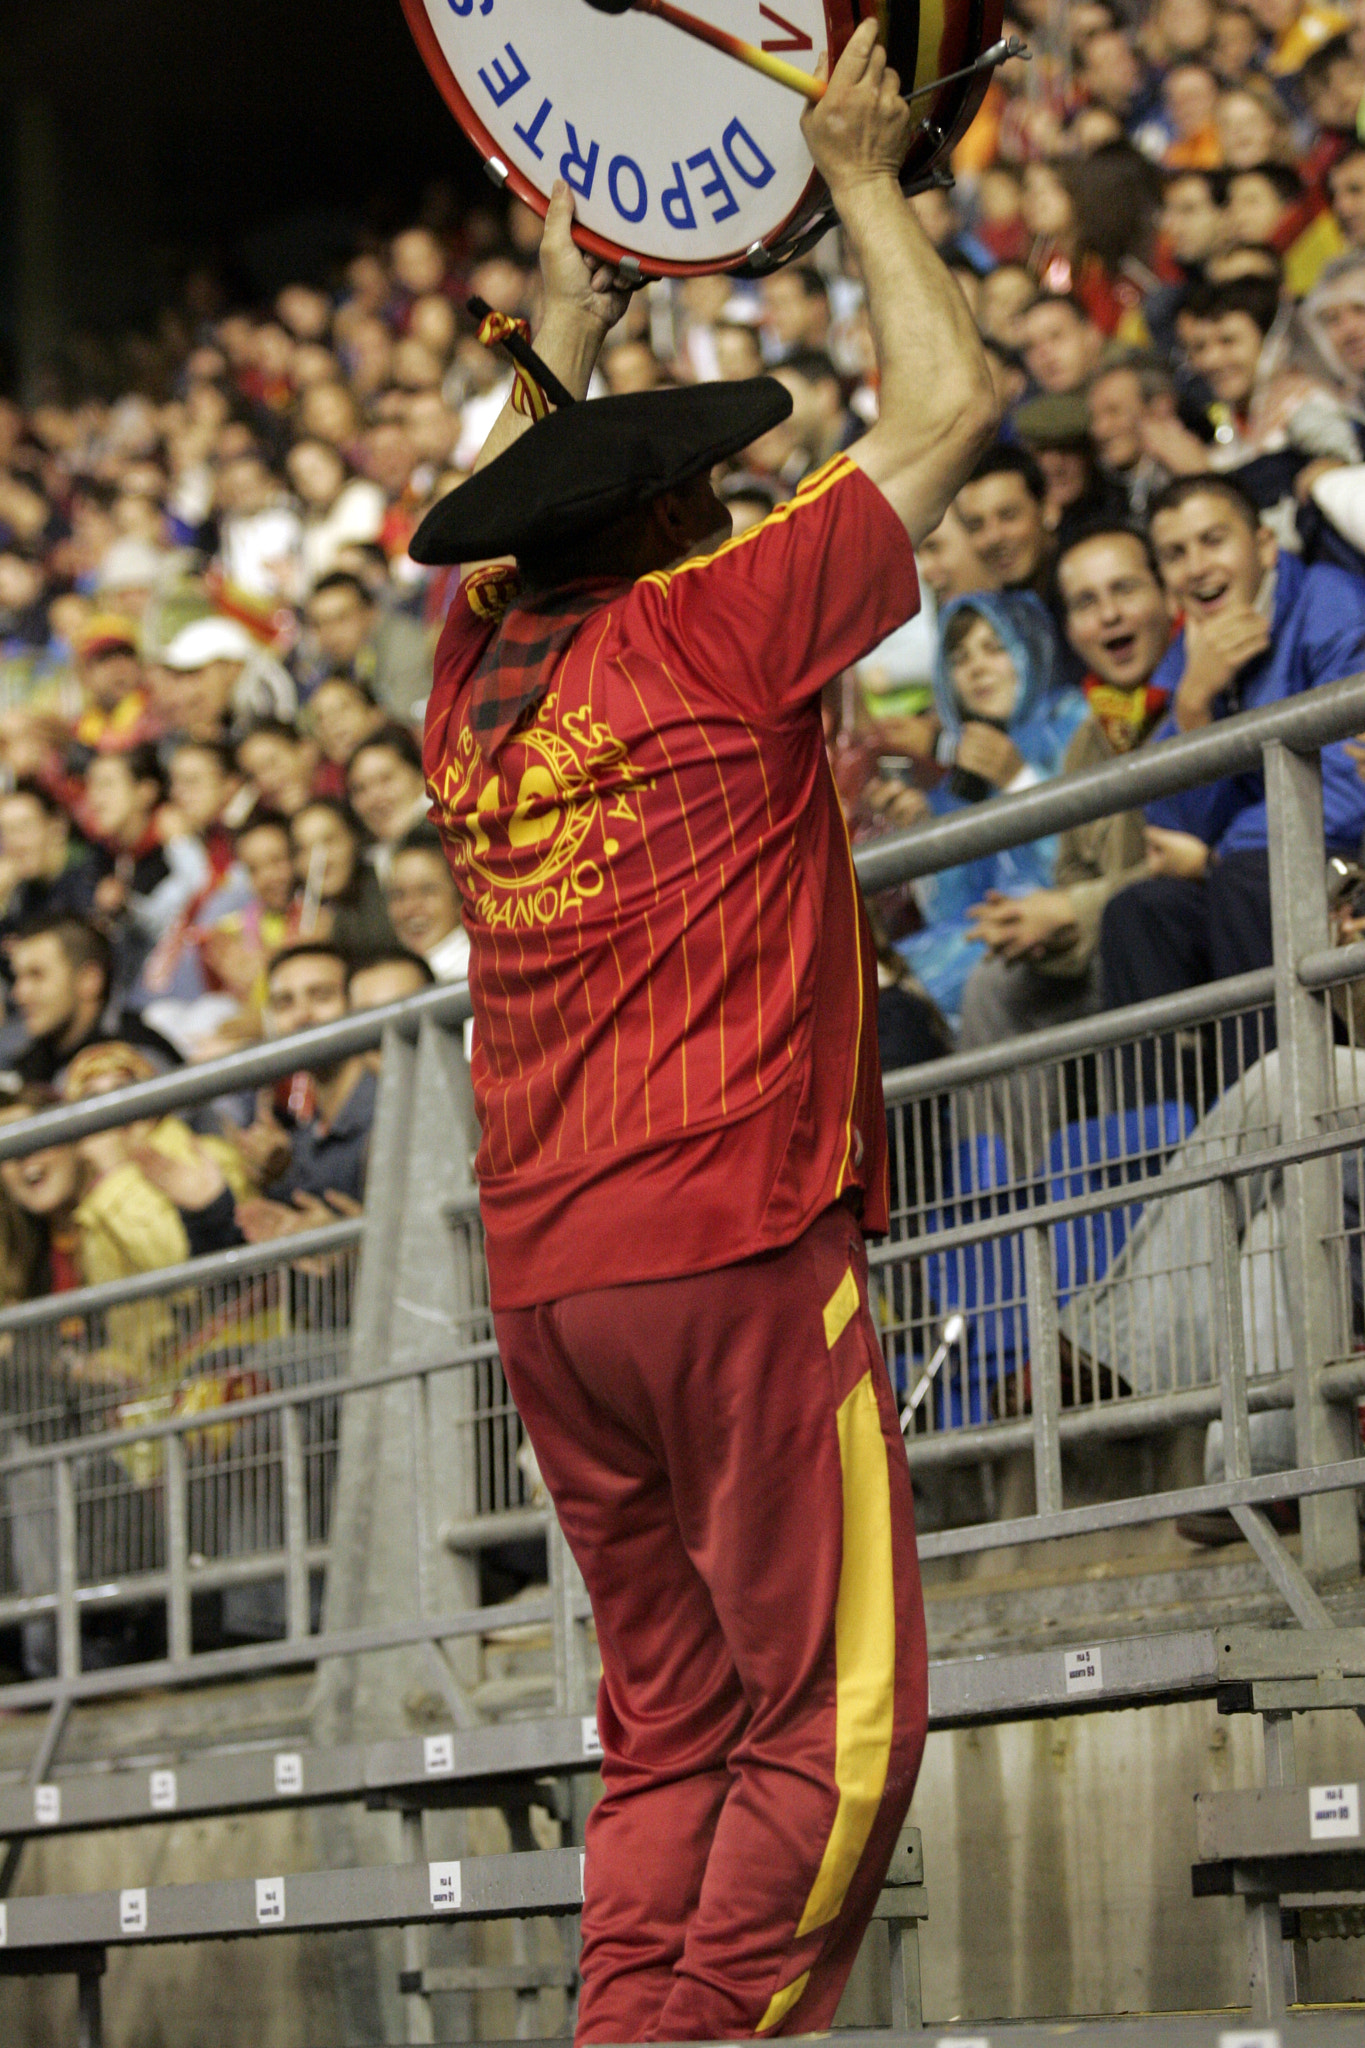 Manolo el del bombo, a popular Spanish team fan. Taken at Ramon de Carranza stadium (Cadiz, Spain),